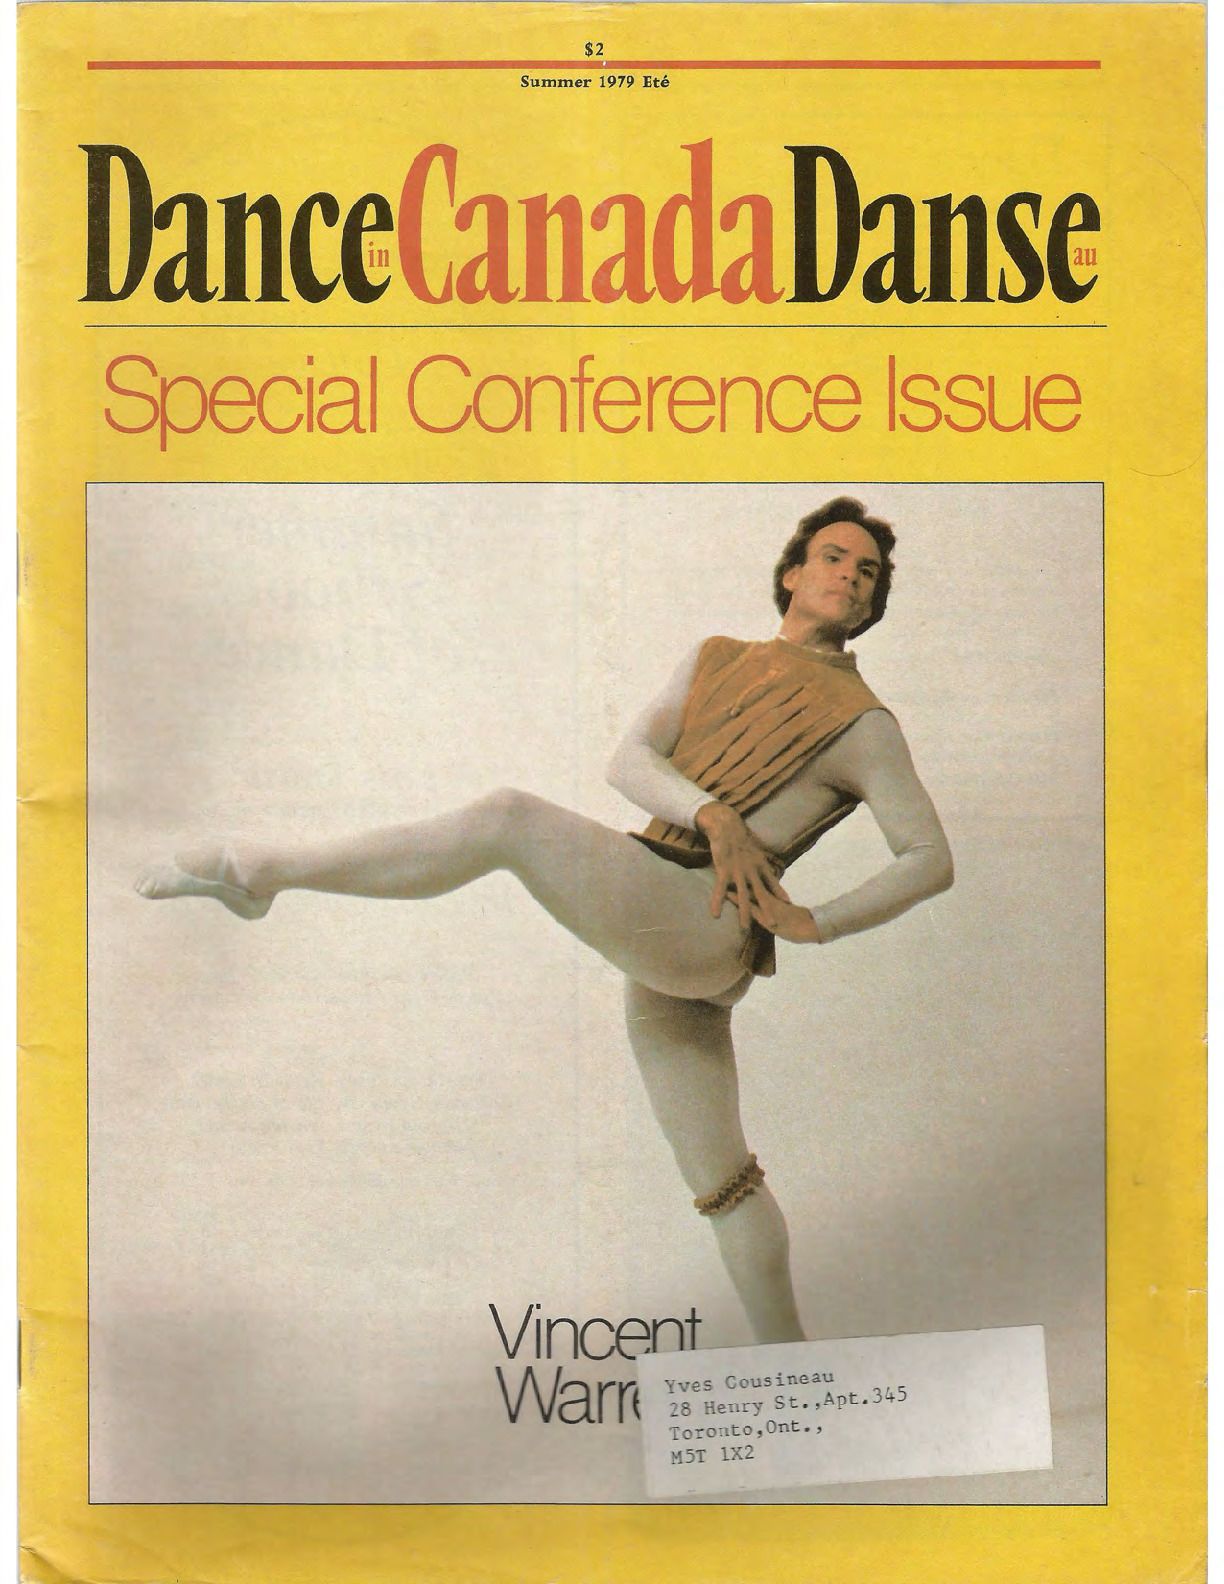 Dance in Canada Magazine No 20 Summer 1979 compressed.pdf